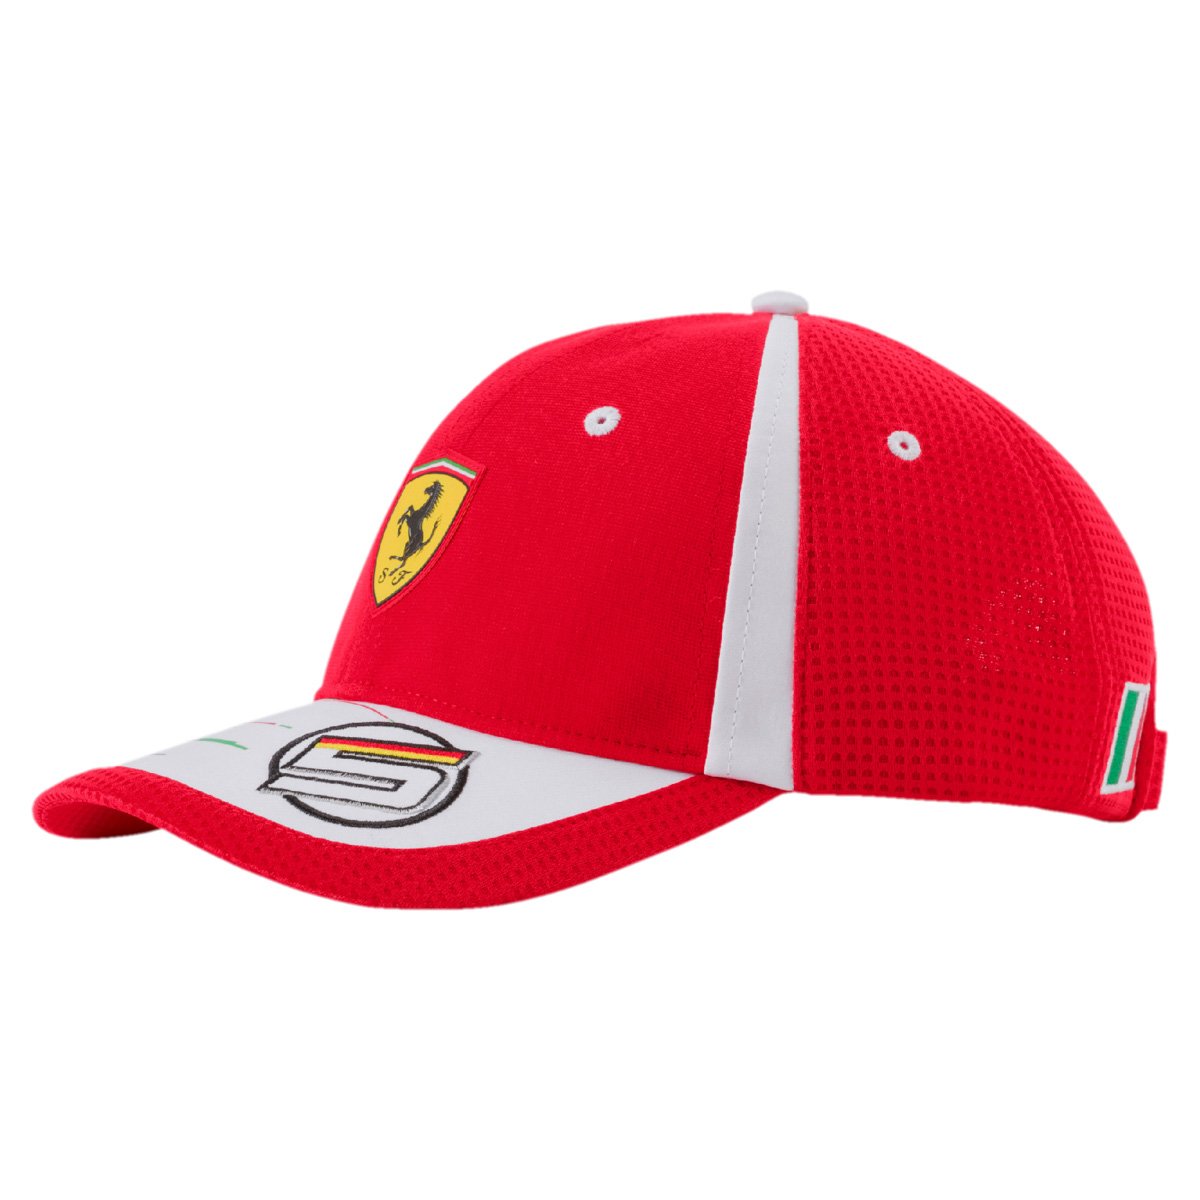 Gorra R&eacute;plica Vettel Ferrari Puma